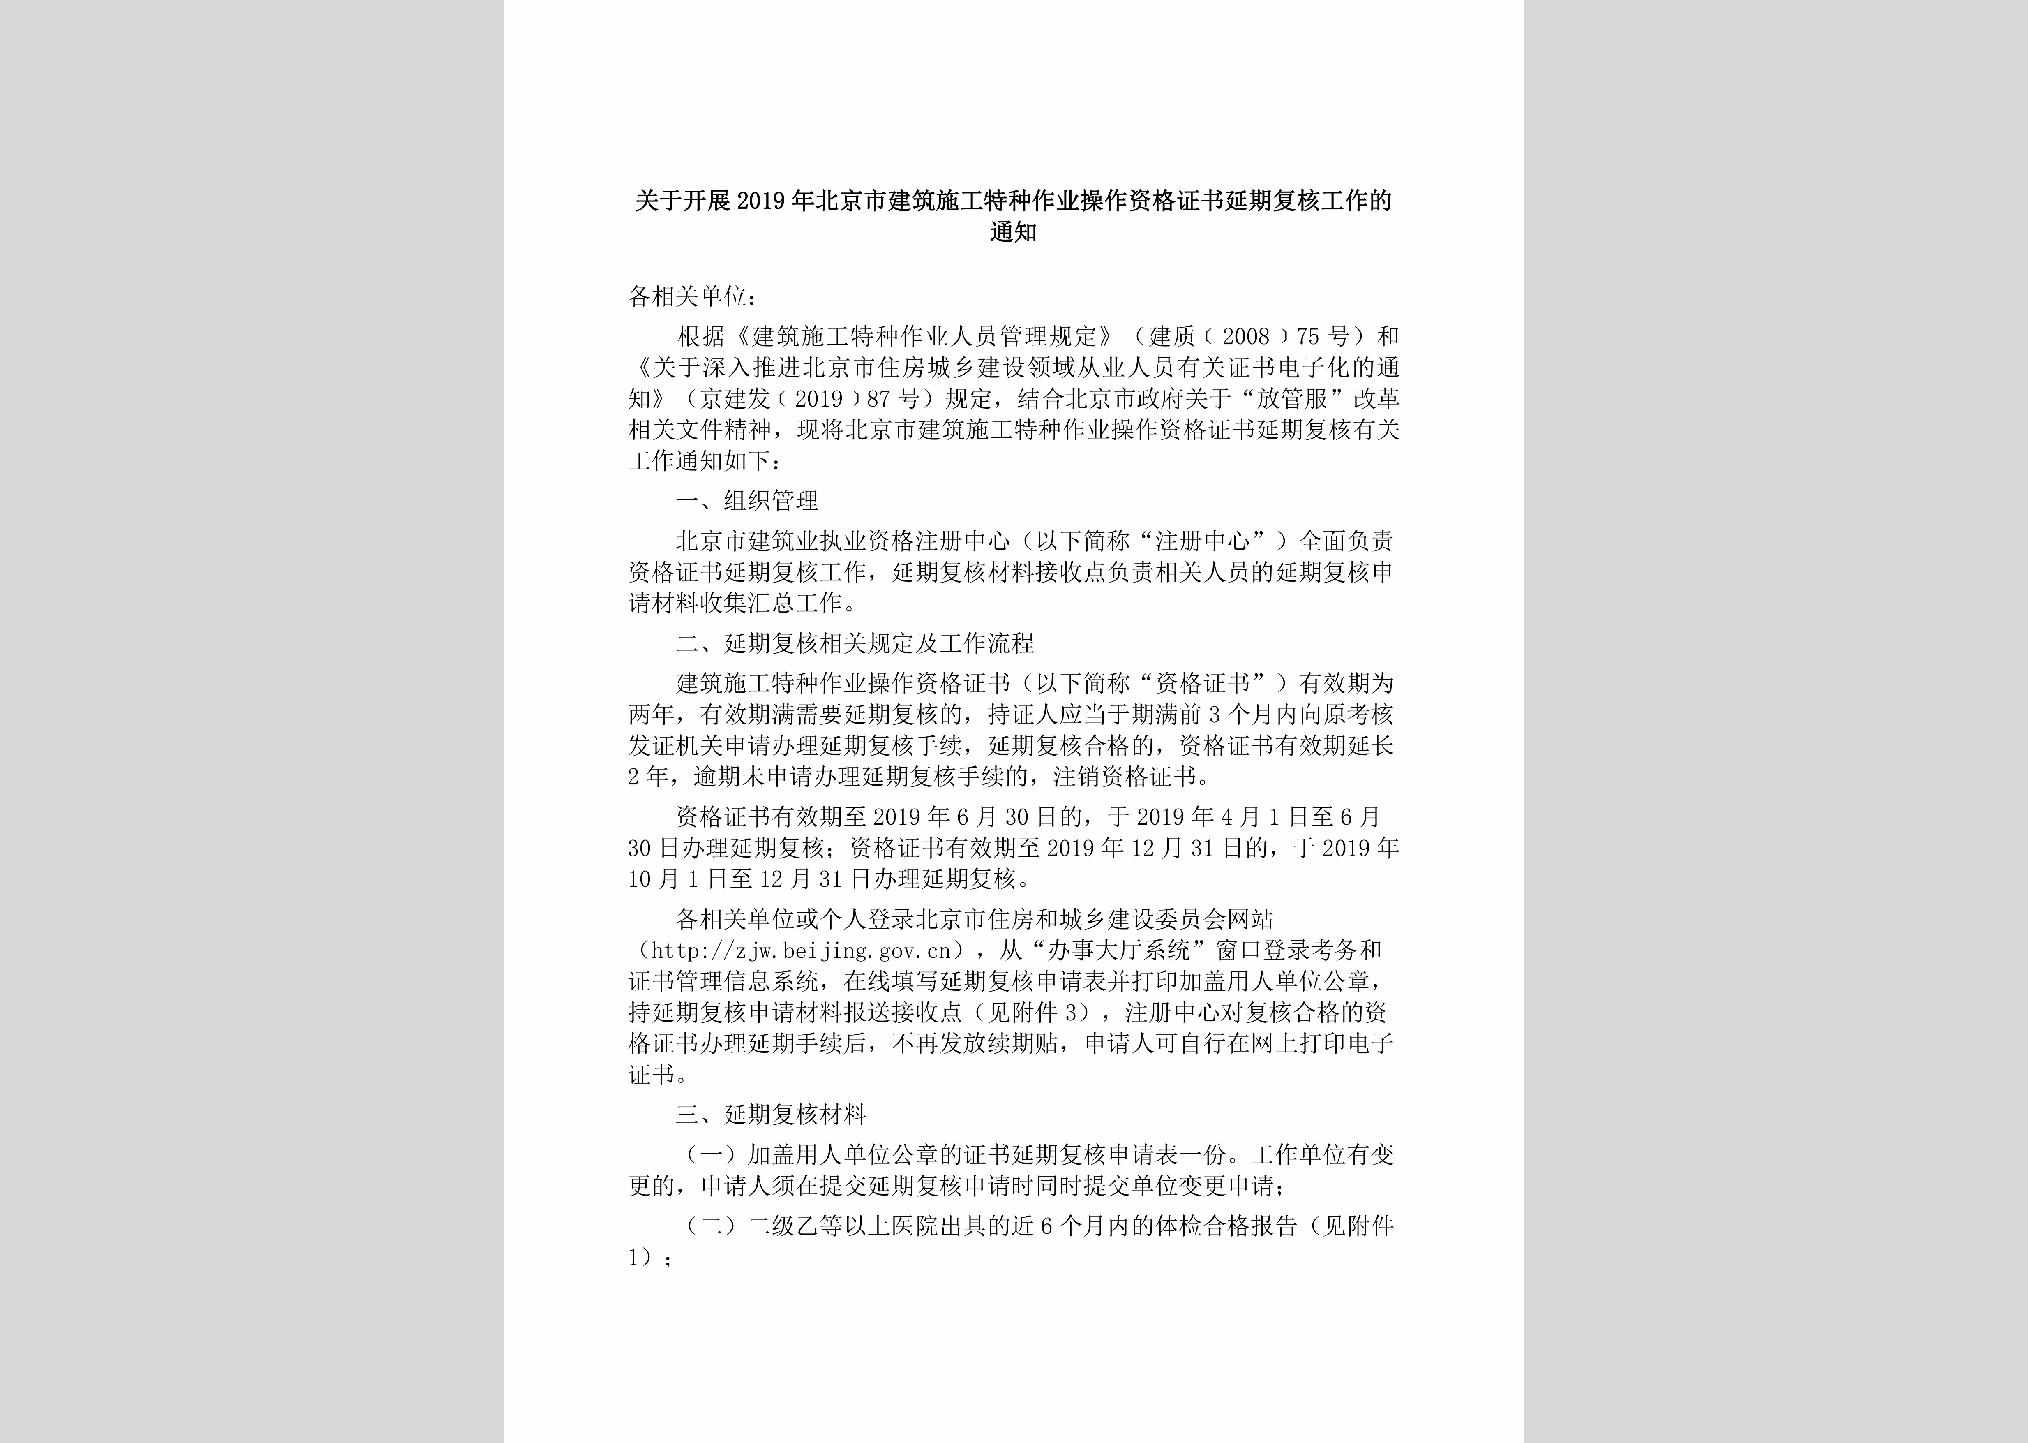 BJ-JZSGTZZY-2019：关于开展2019年北京市建筑施工特种作业操作资格证书延期复核工作的通知